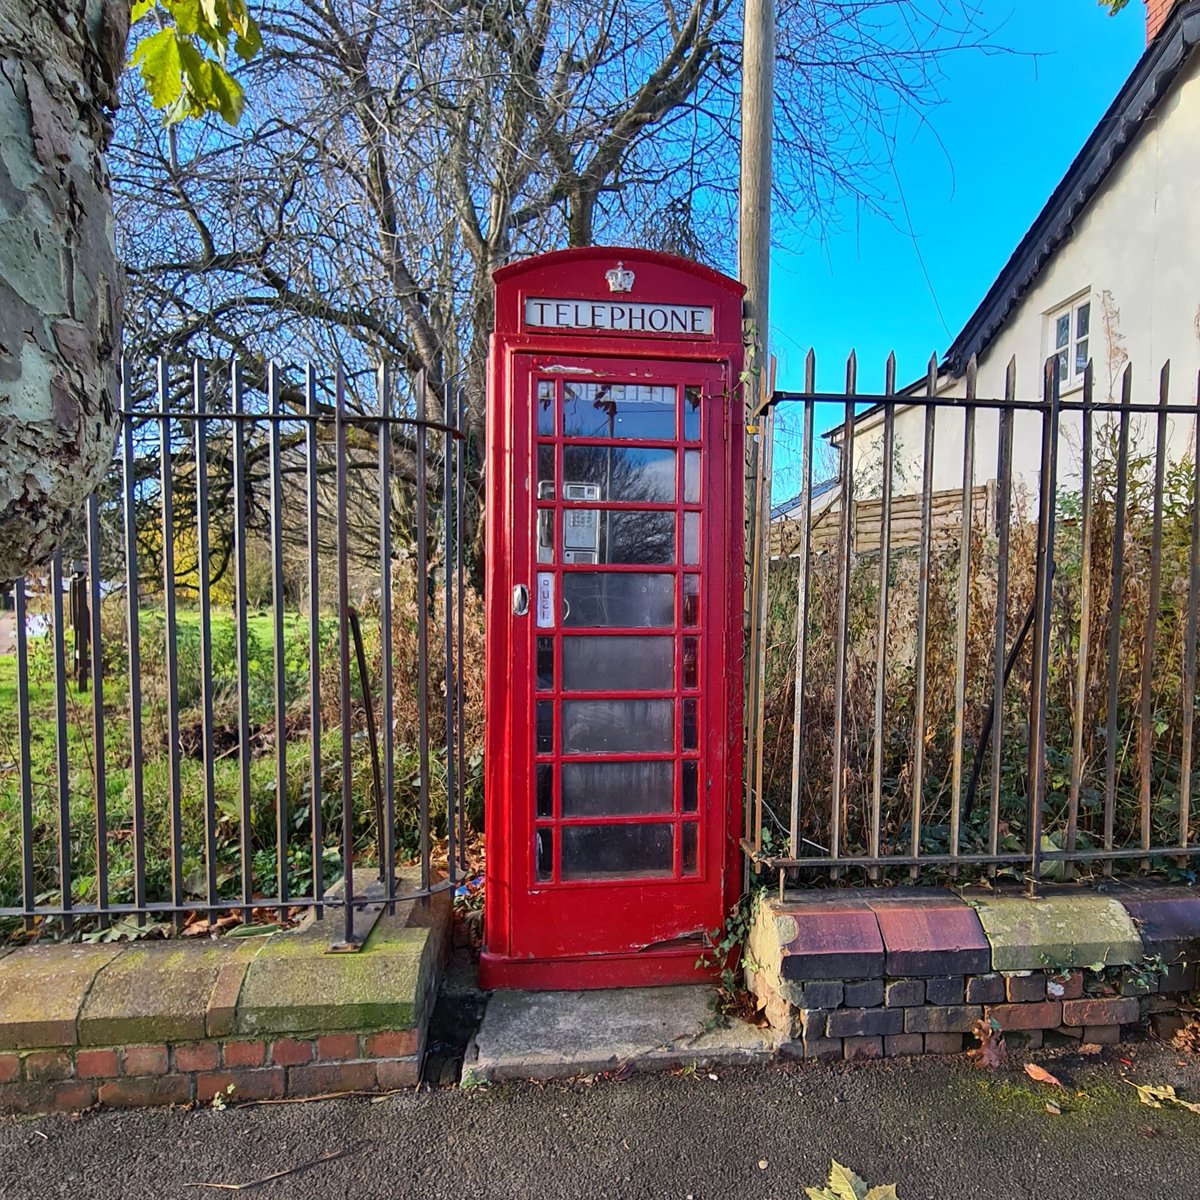 #redtelephonebox #redphonebox #k6telephonebox #usk #monmouthshire